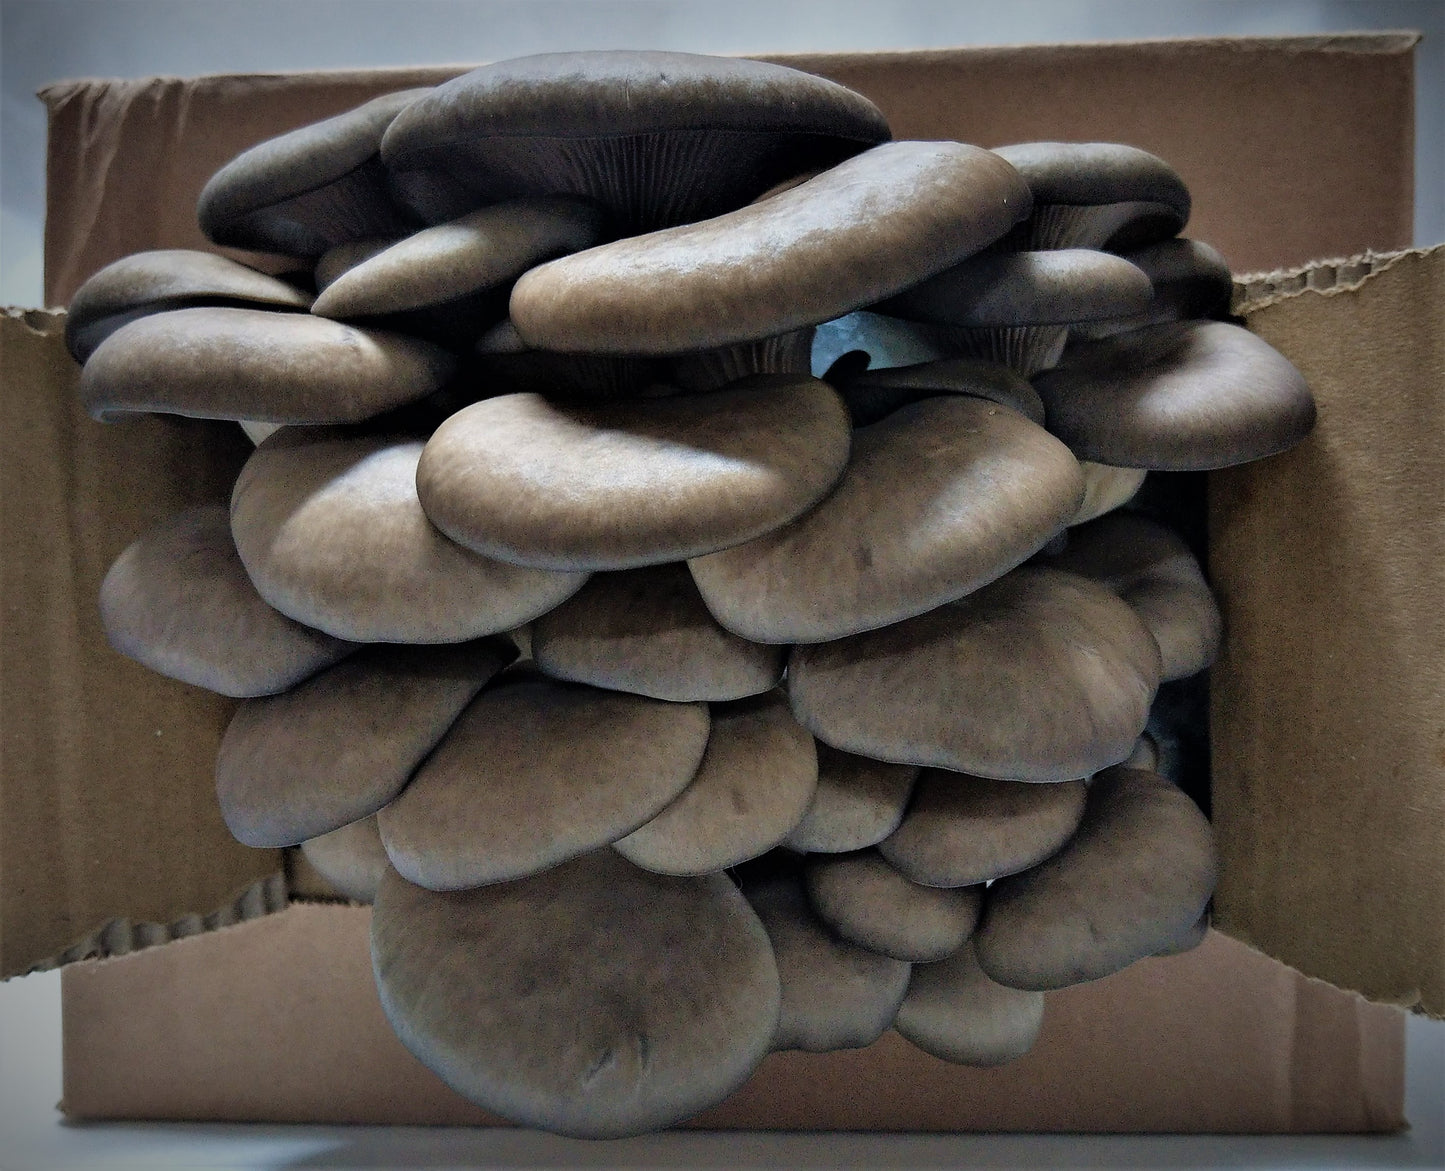 grey oyster mushroom grow kit